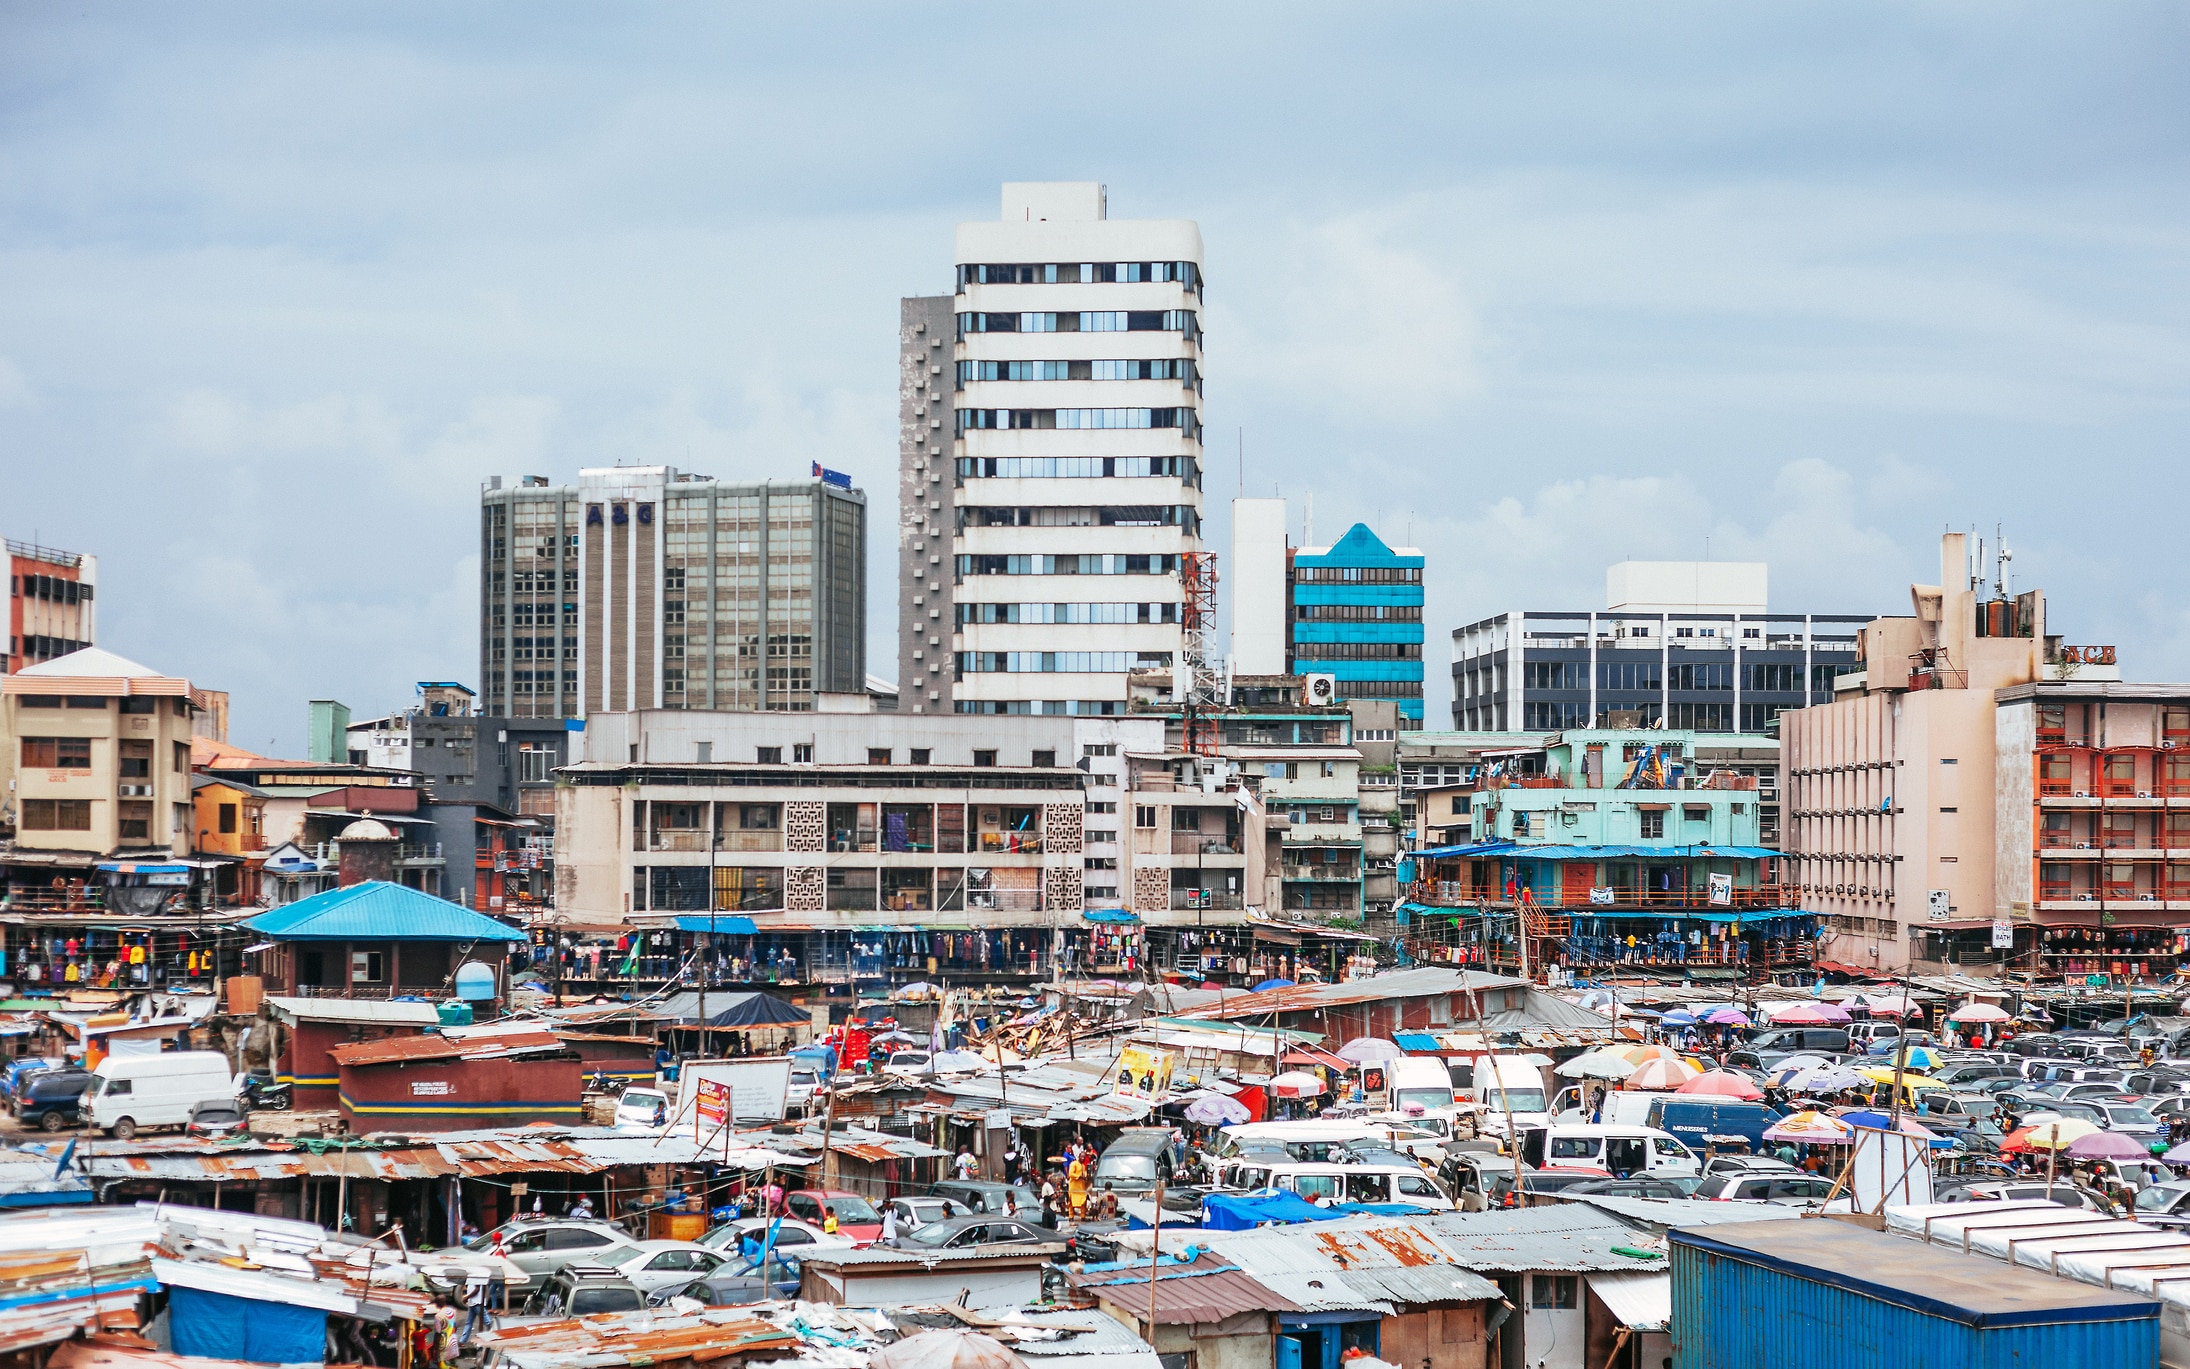 Balogun market – Lagos, Nigeria